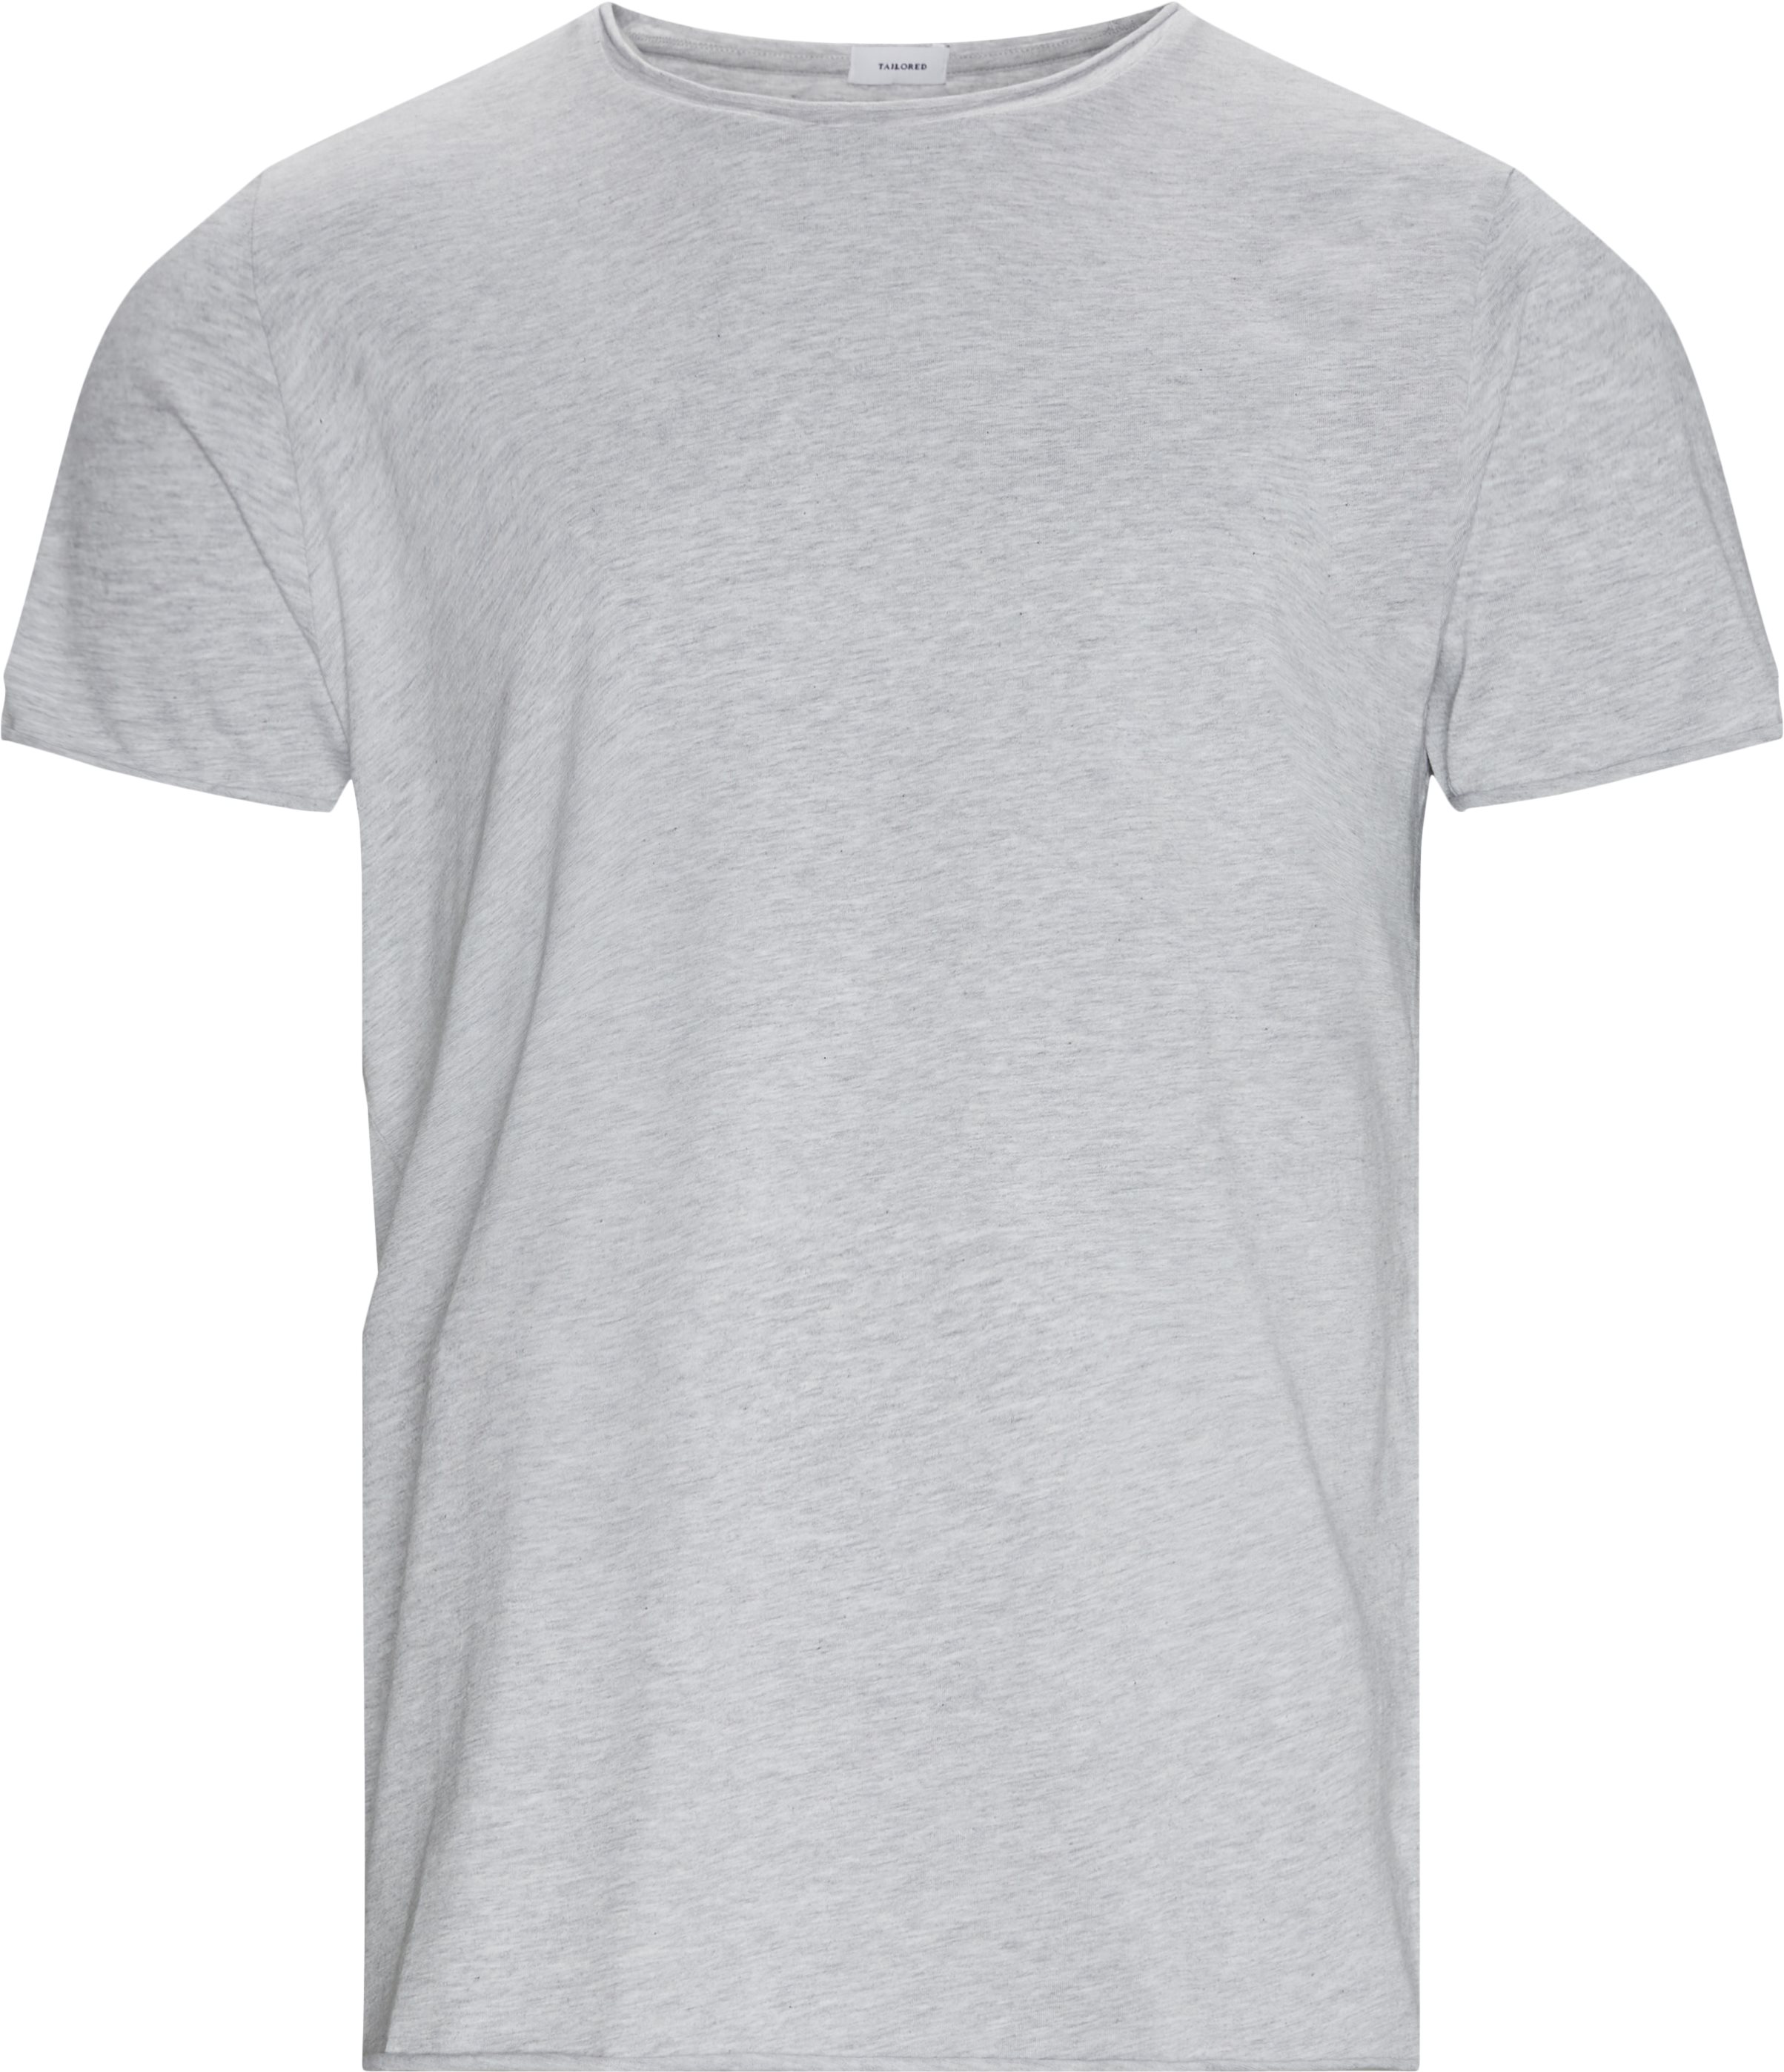 Tailored T-shirts RAW EDGE T-SHIRT Grey